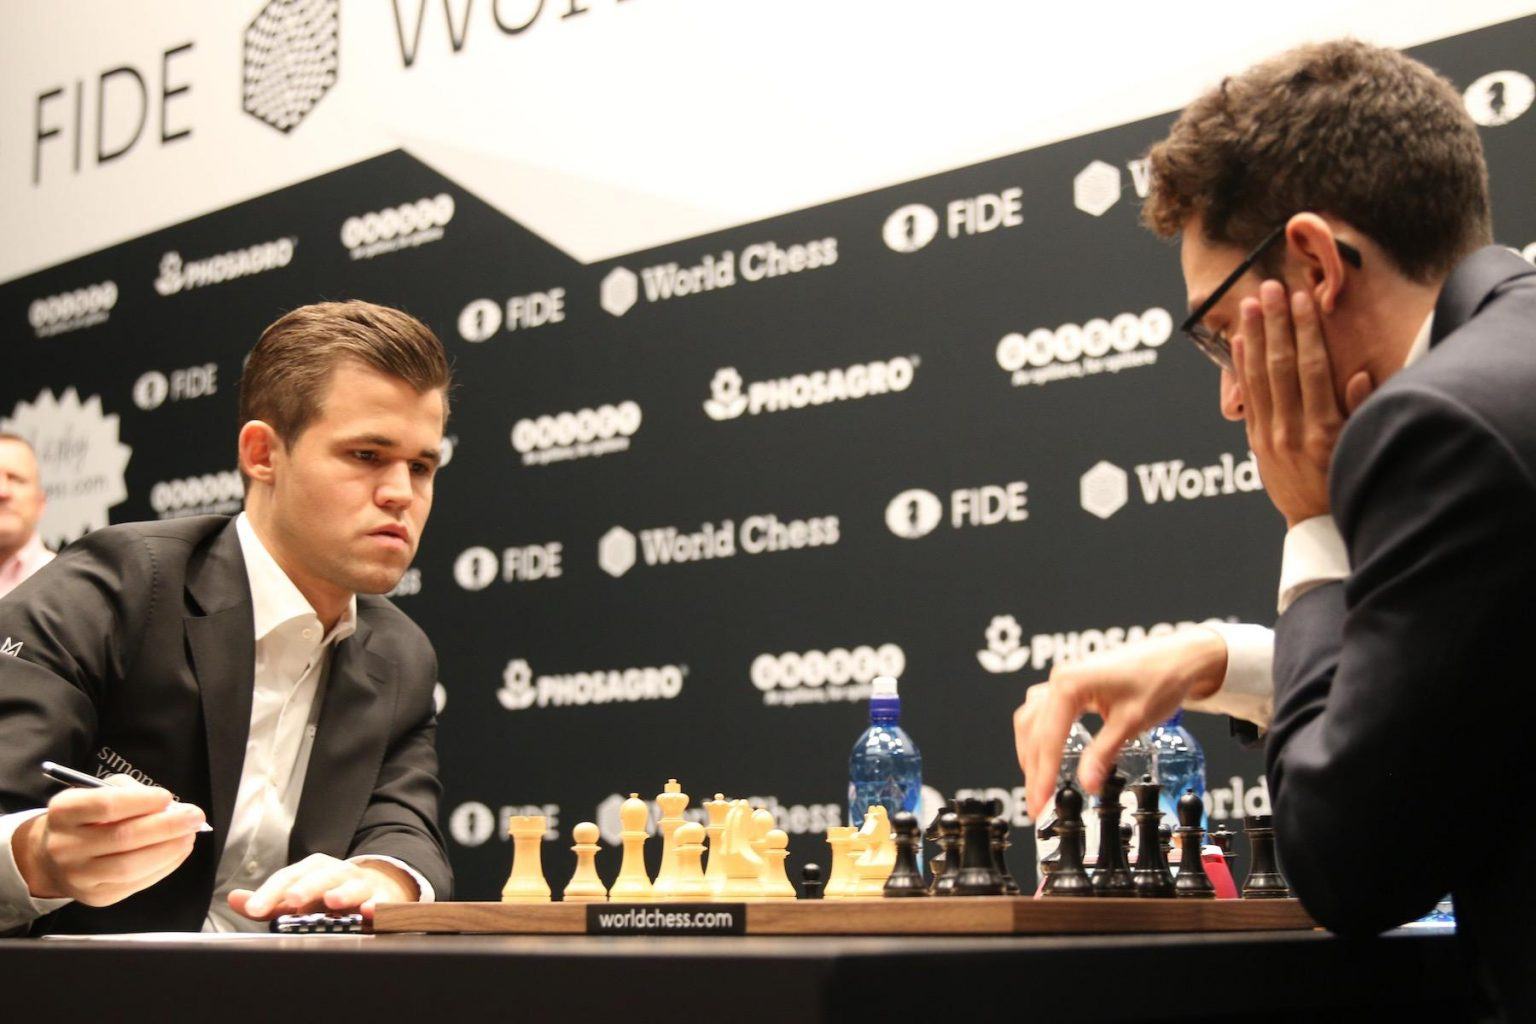 World Chess Championship Draws Betting Interest, Unibet Sponsorship